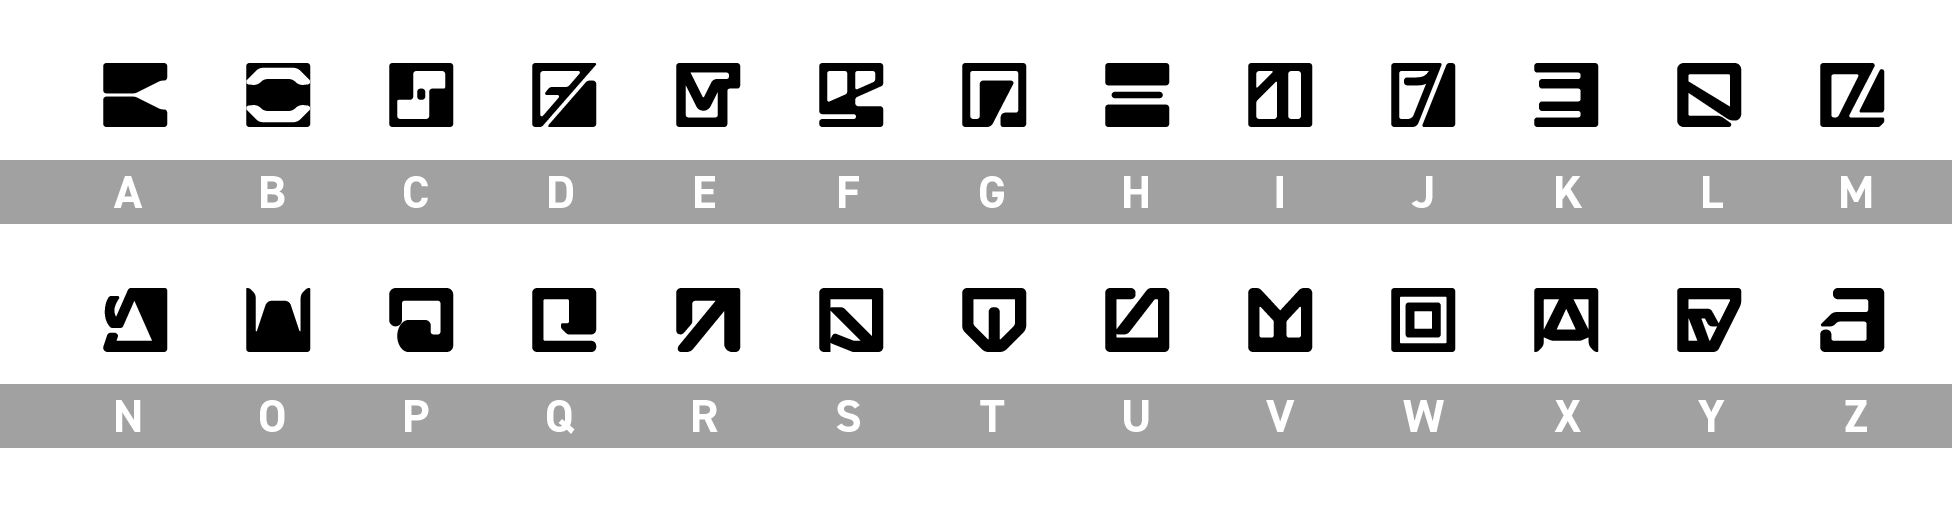 Digital Alphabet Lore A-Z Uppercase SVG / PNG / DXF / Eps / 